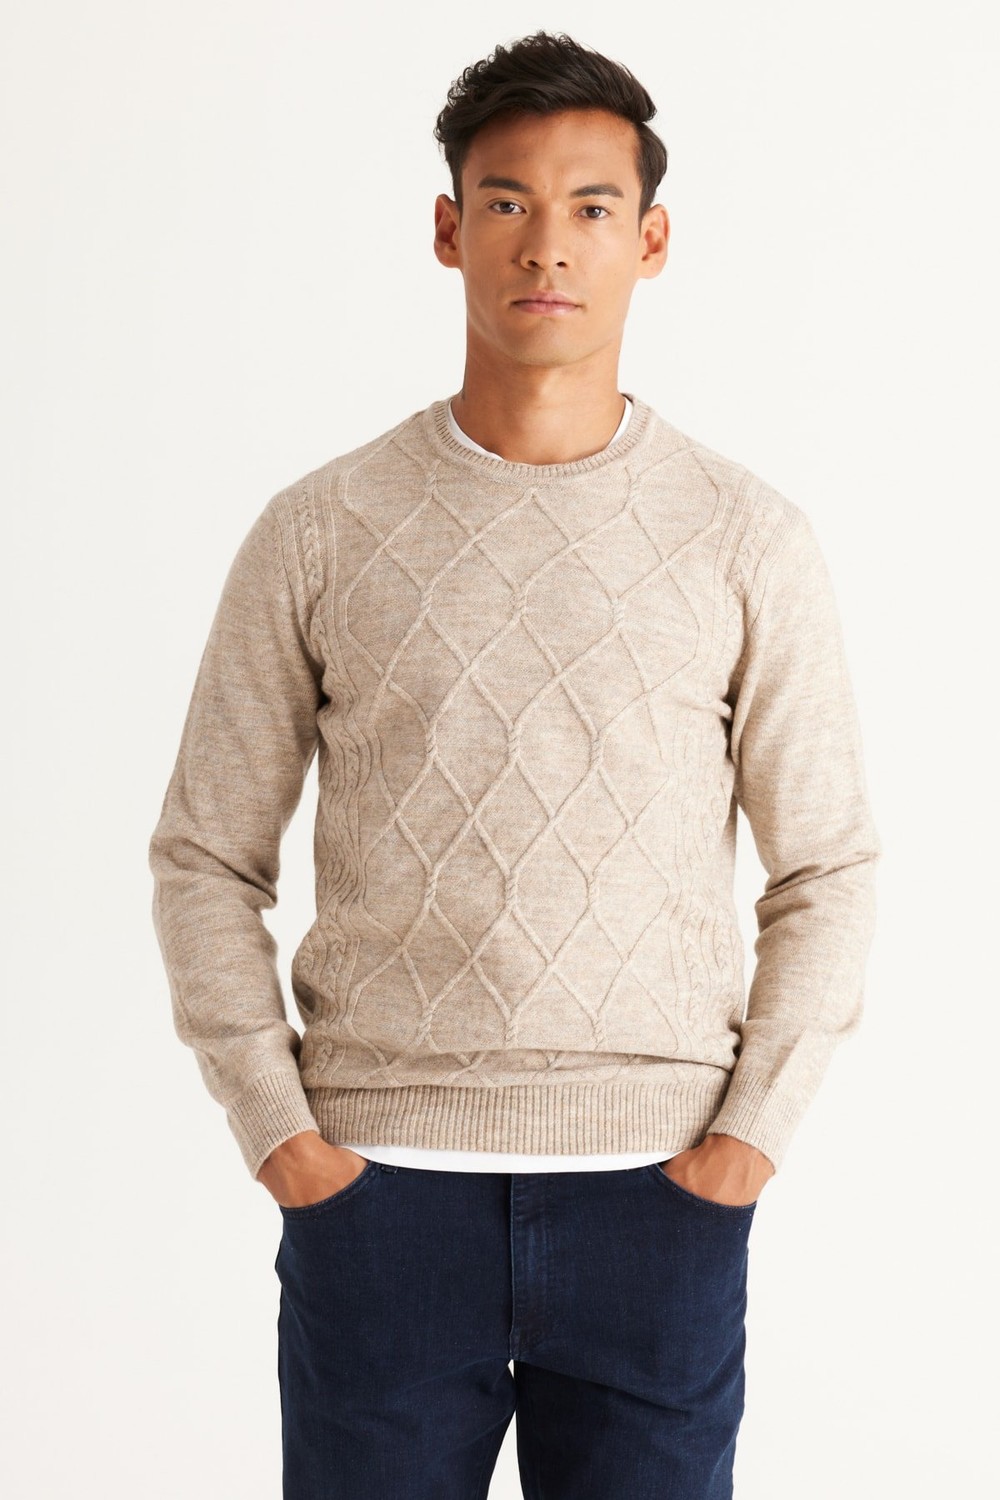 ALTINYILDIZ CLASSICS Men's Beige Melange Standard Fit Normal Cut Crew Neck Braided Knitwear Sweater.